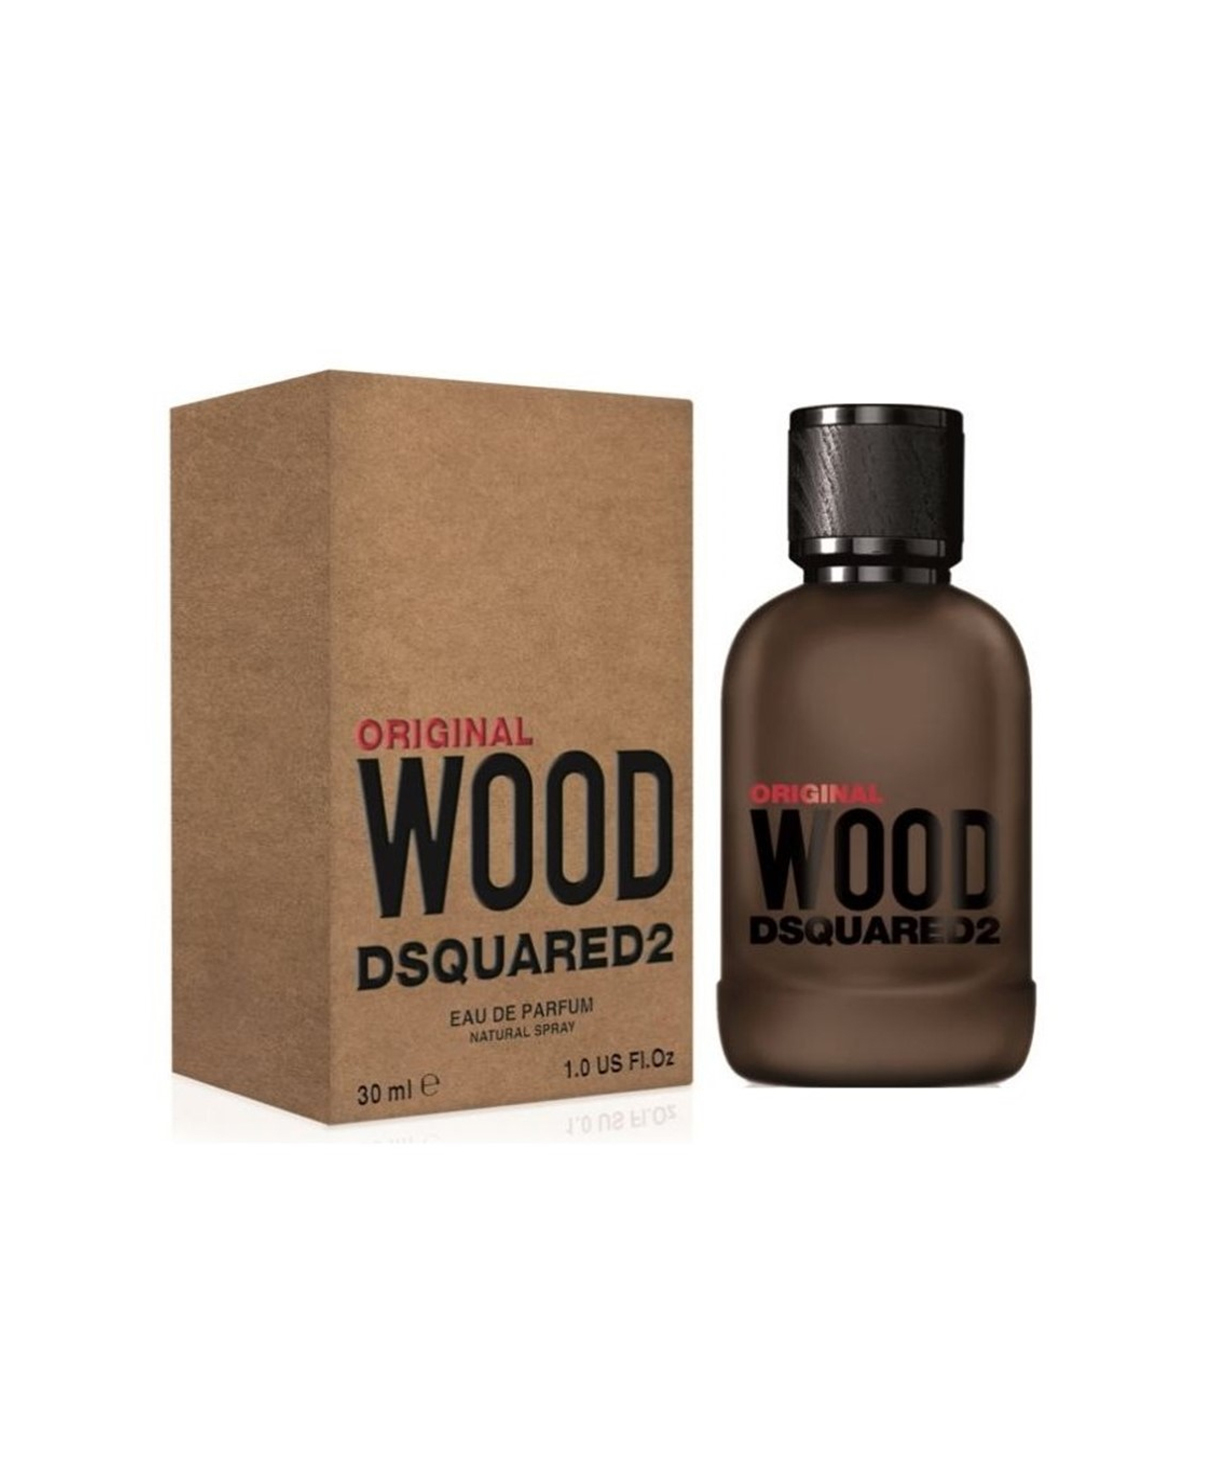 Perfume «Dsquared2» Original Wood, for men, 30 ml